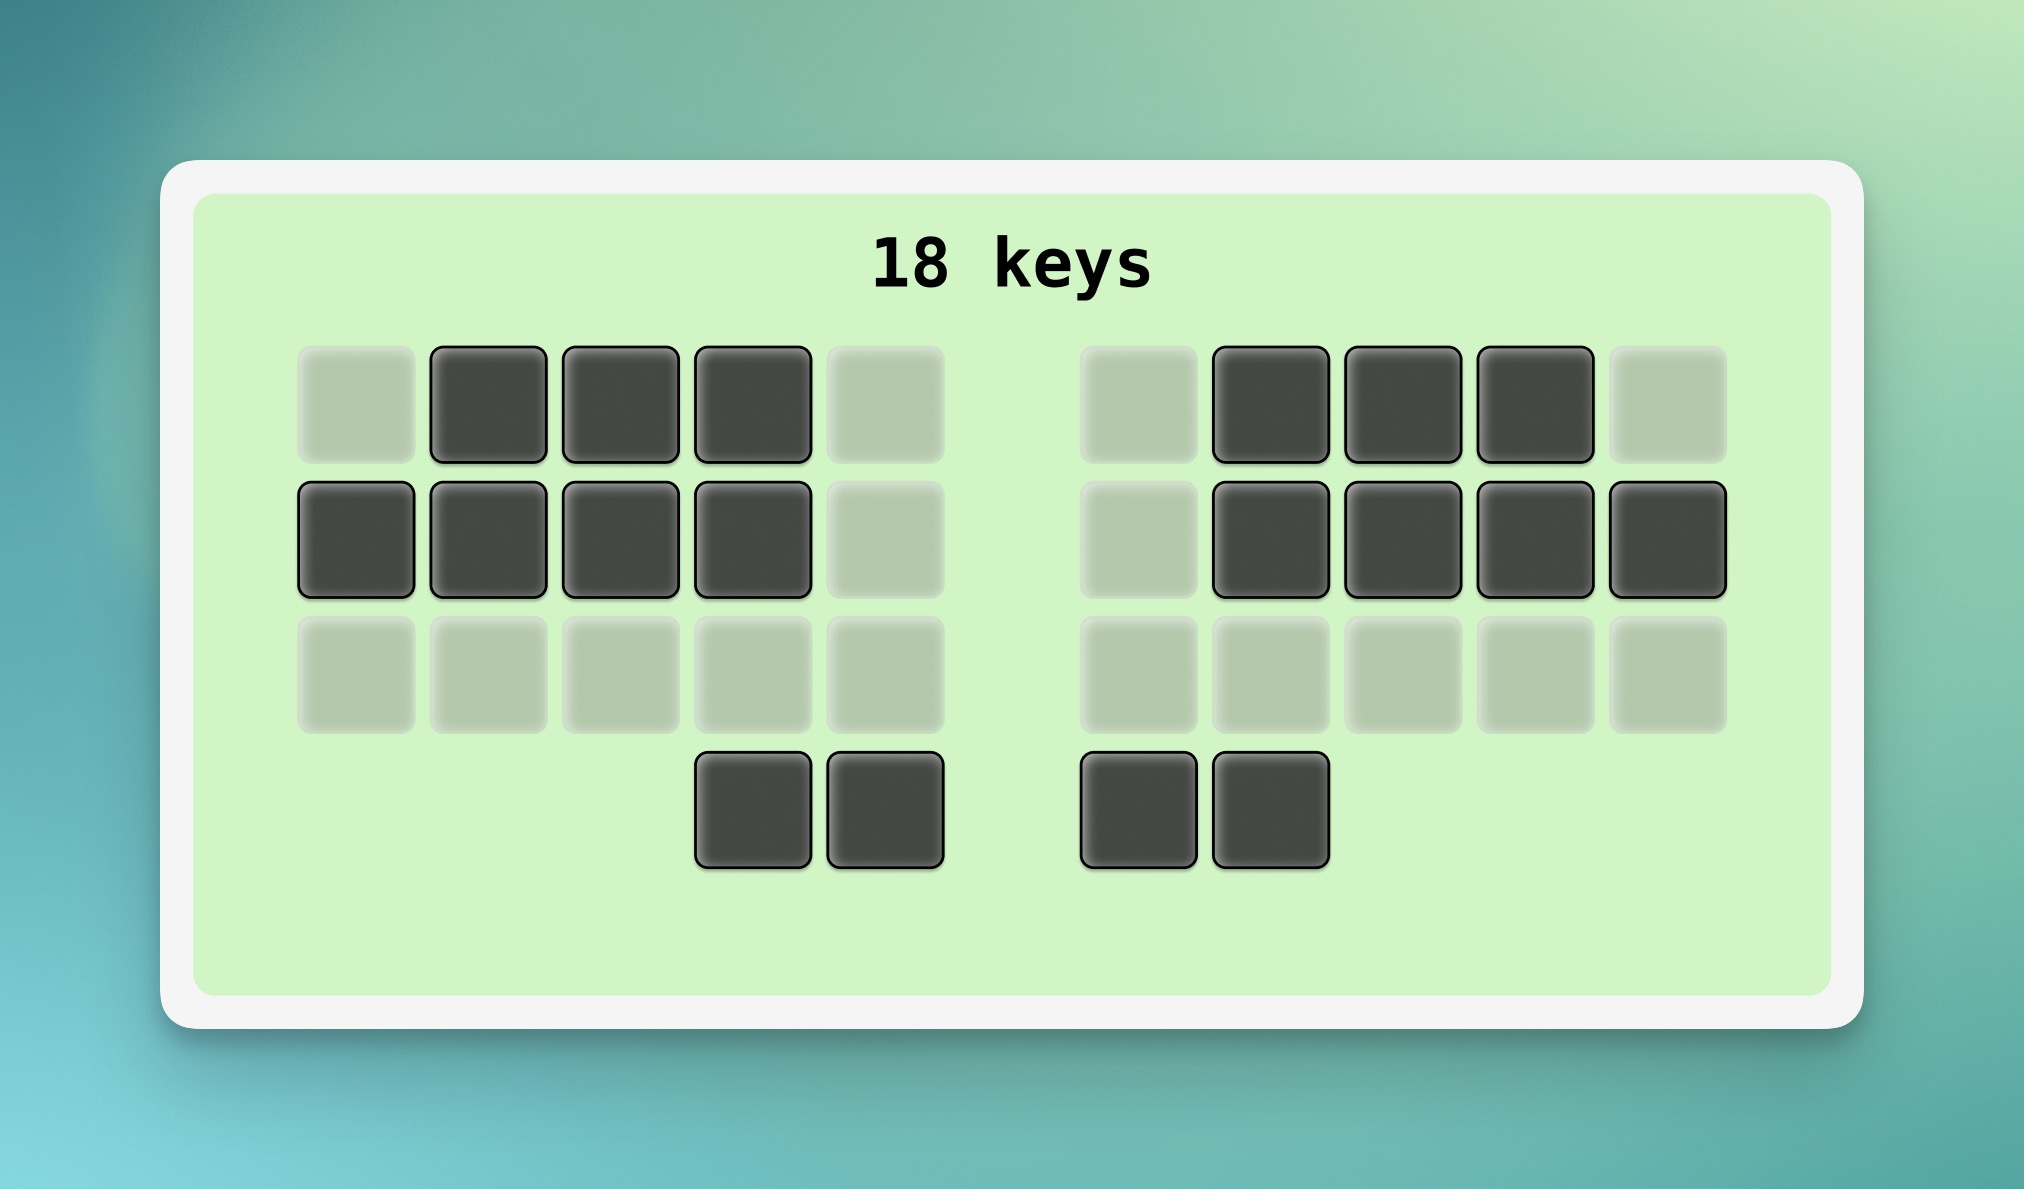 Keymap of the 18 comfortable keys to type on